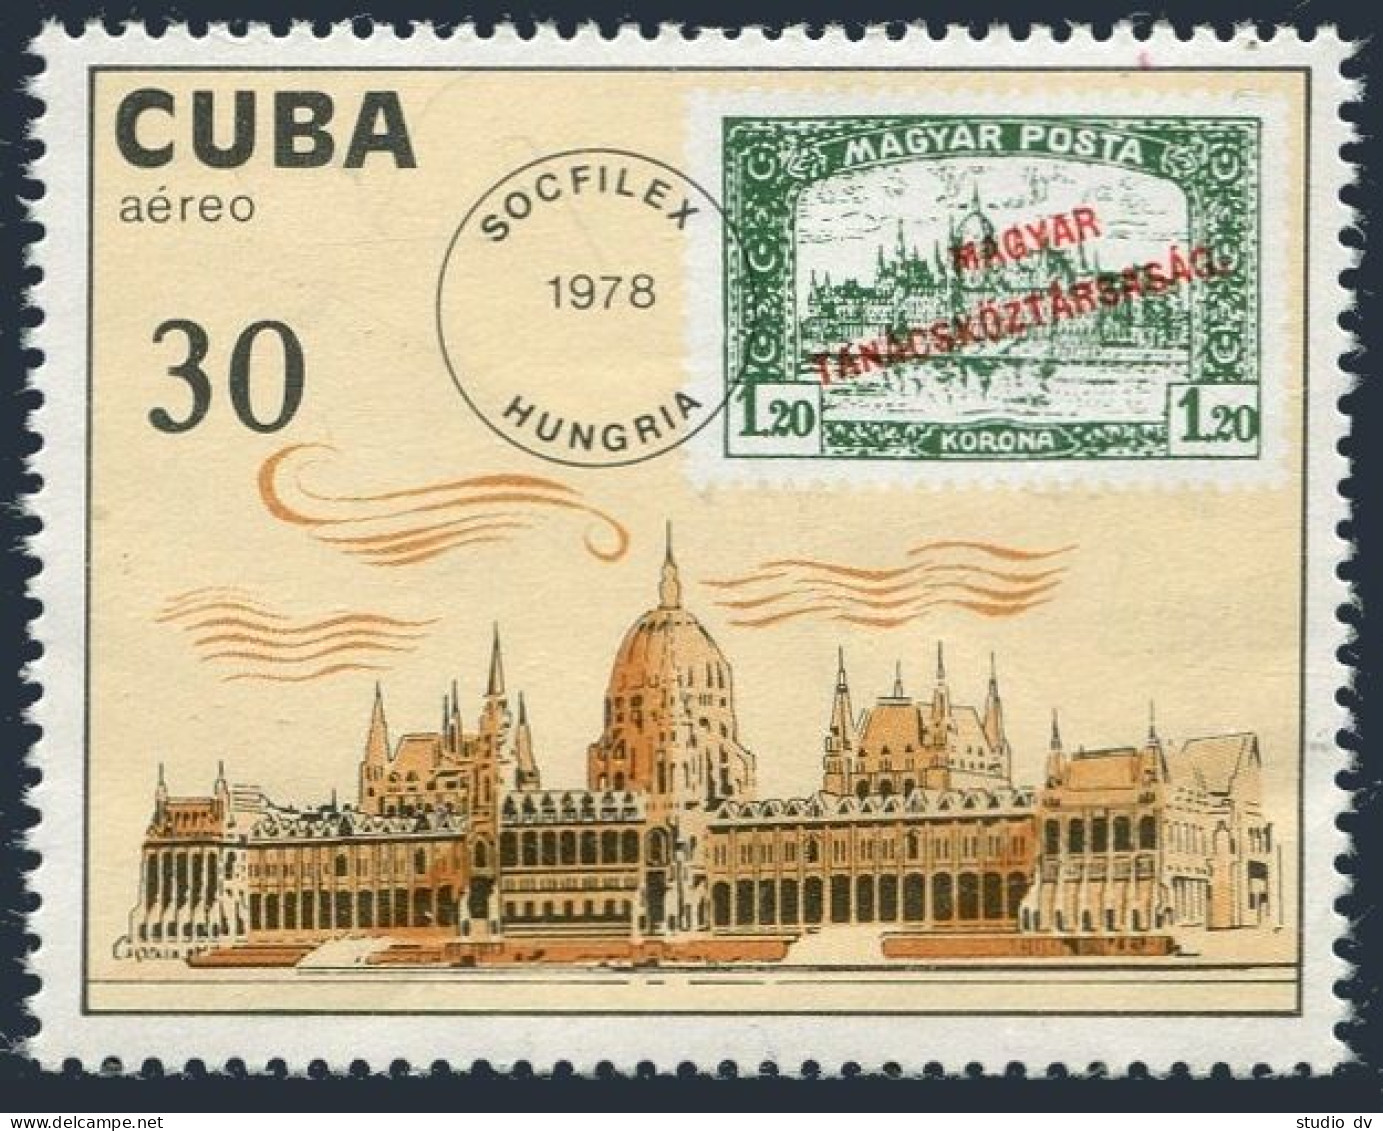 Cuba C280, MNH. Michel 2293. SOCFILEX-1978, Budapest. Hungarian Stamp. - Nuovi